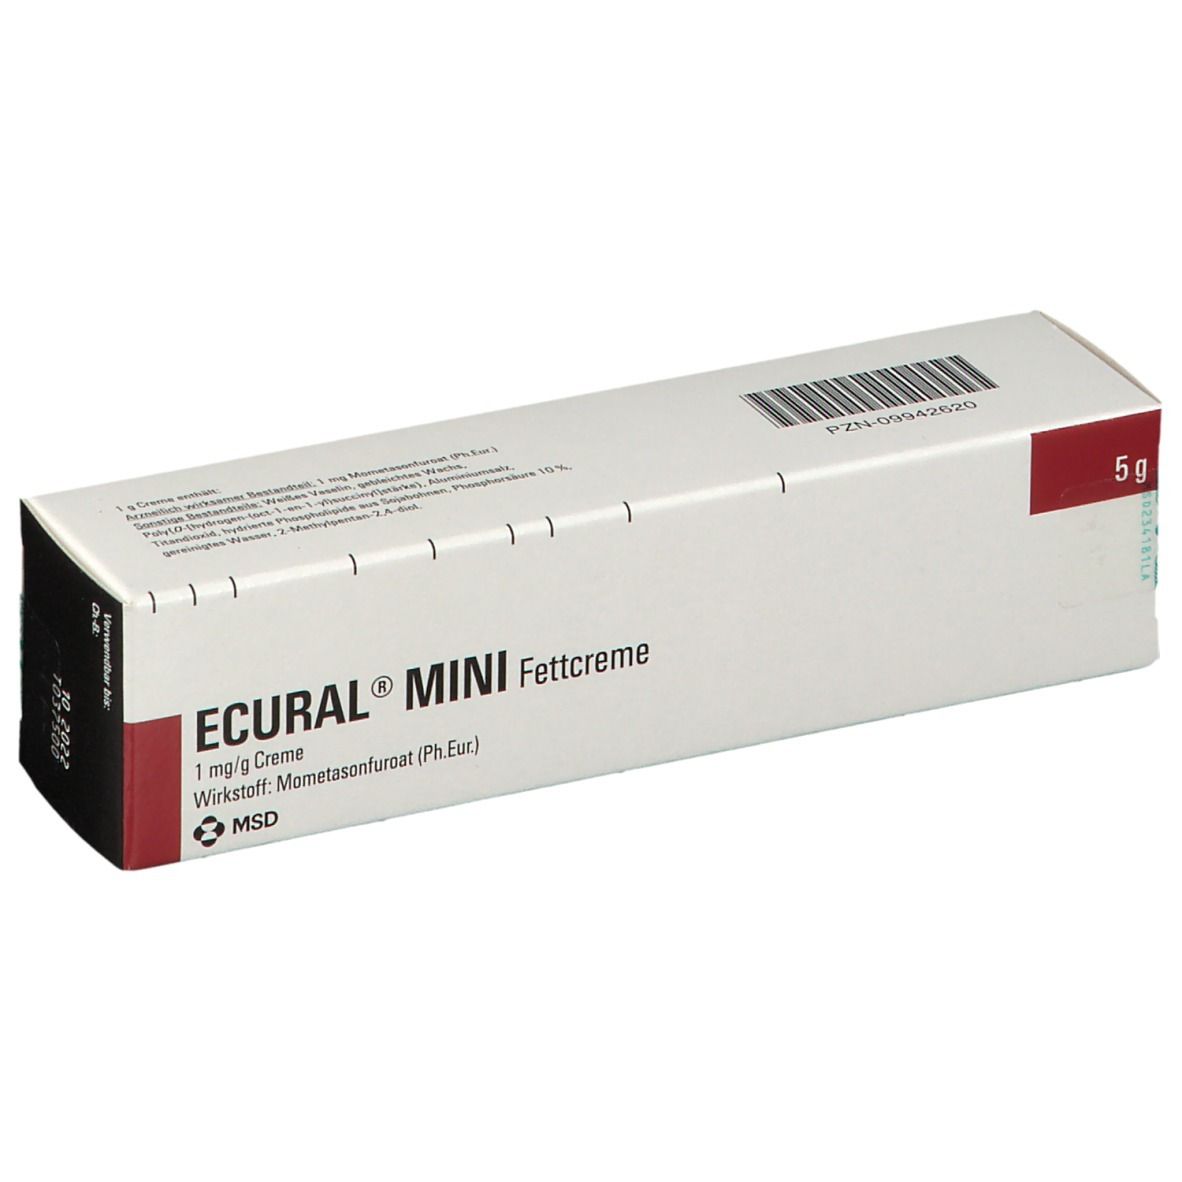 ECURAL® MINI Fettcreme 1 mg/g